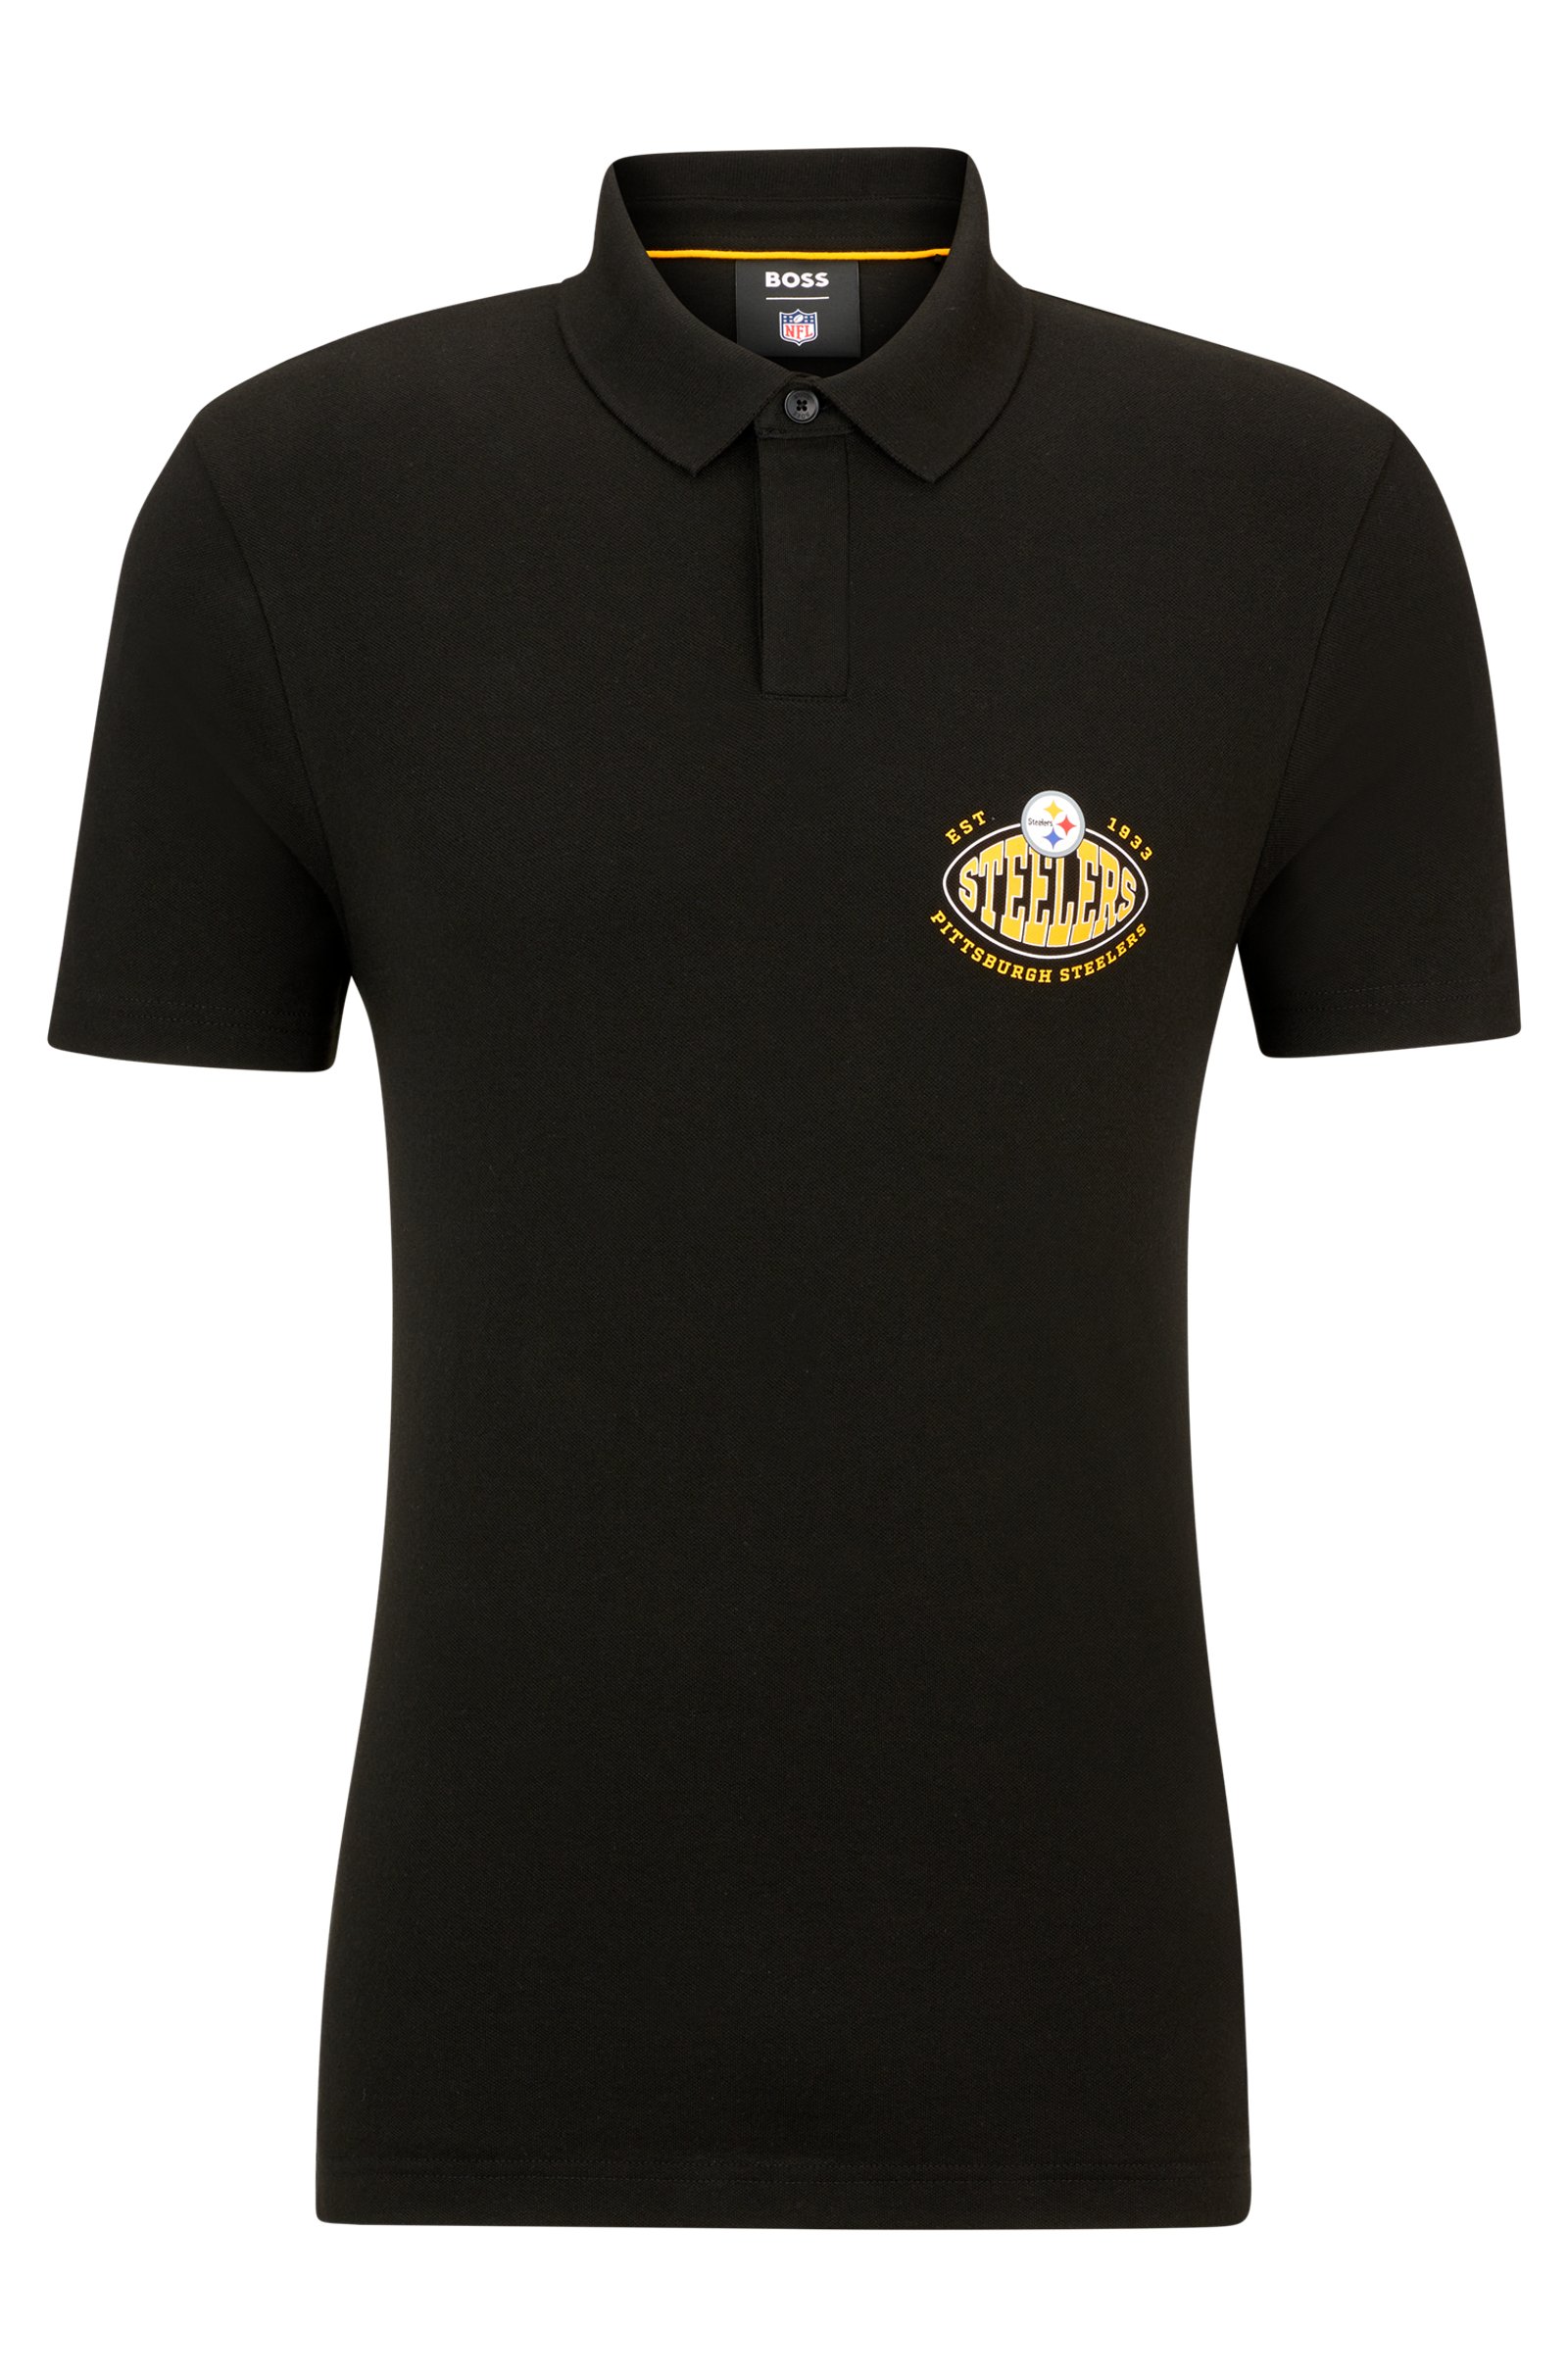 Футболка поло Boss X Nfl Cotton-piqué Collaborative Branding, Steelers футболка поло boss x nfl cotton piqué with collaborative branding rams черный